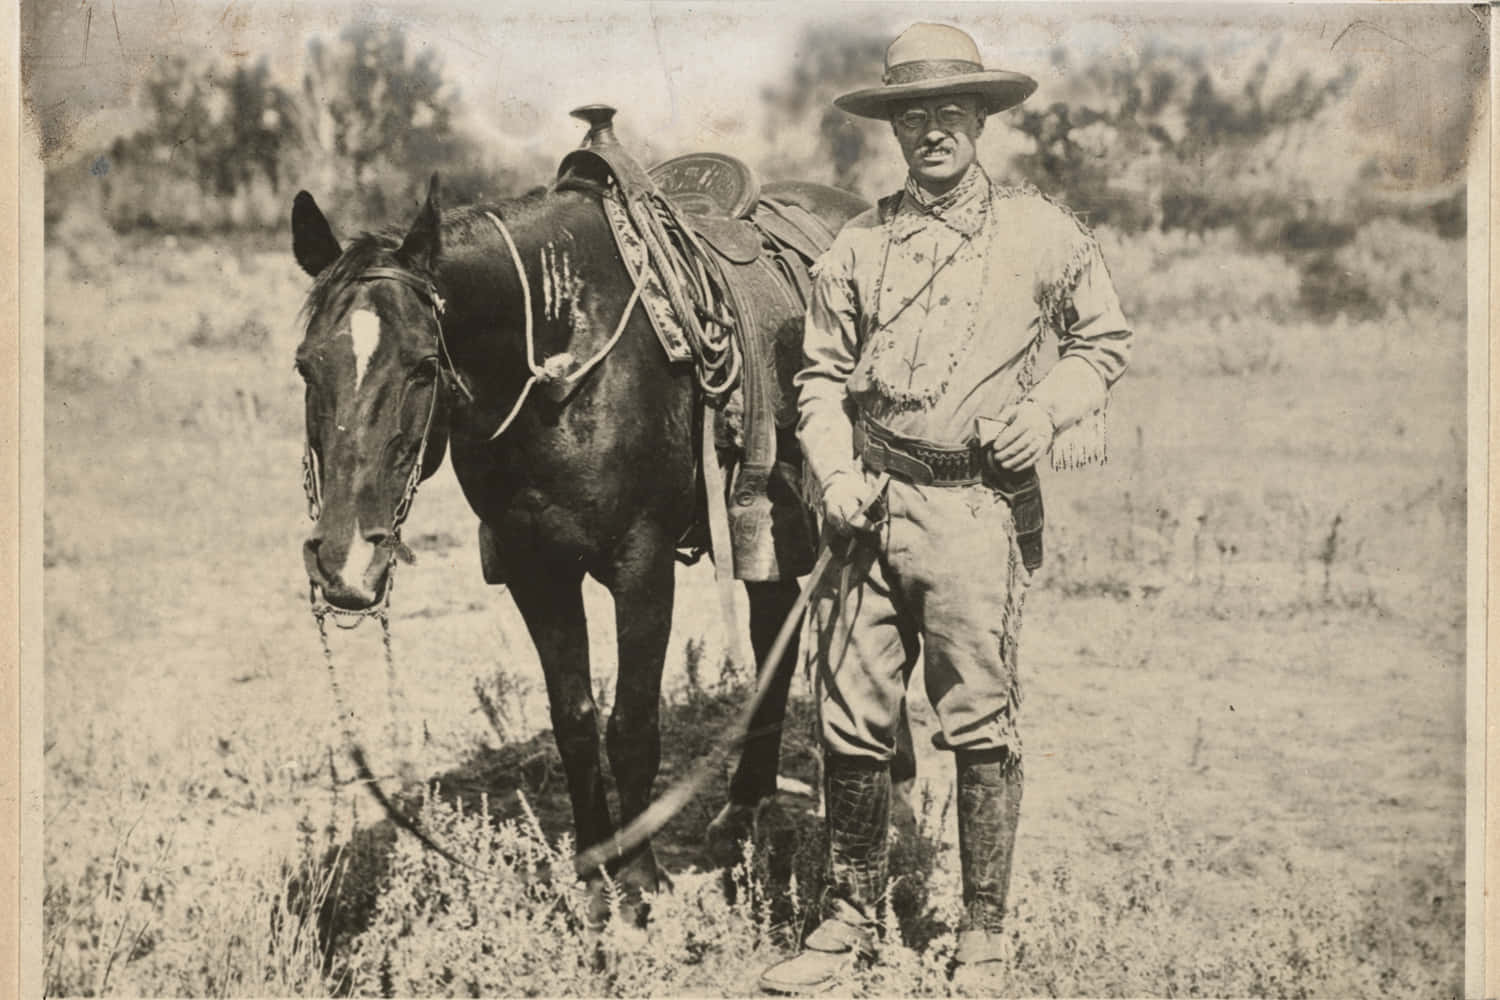 A lone cowboy riding through the West